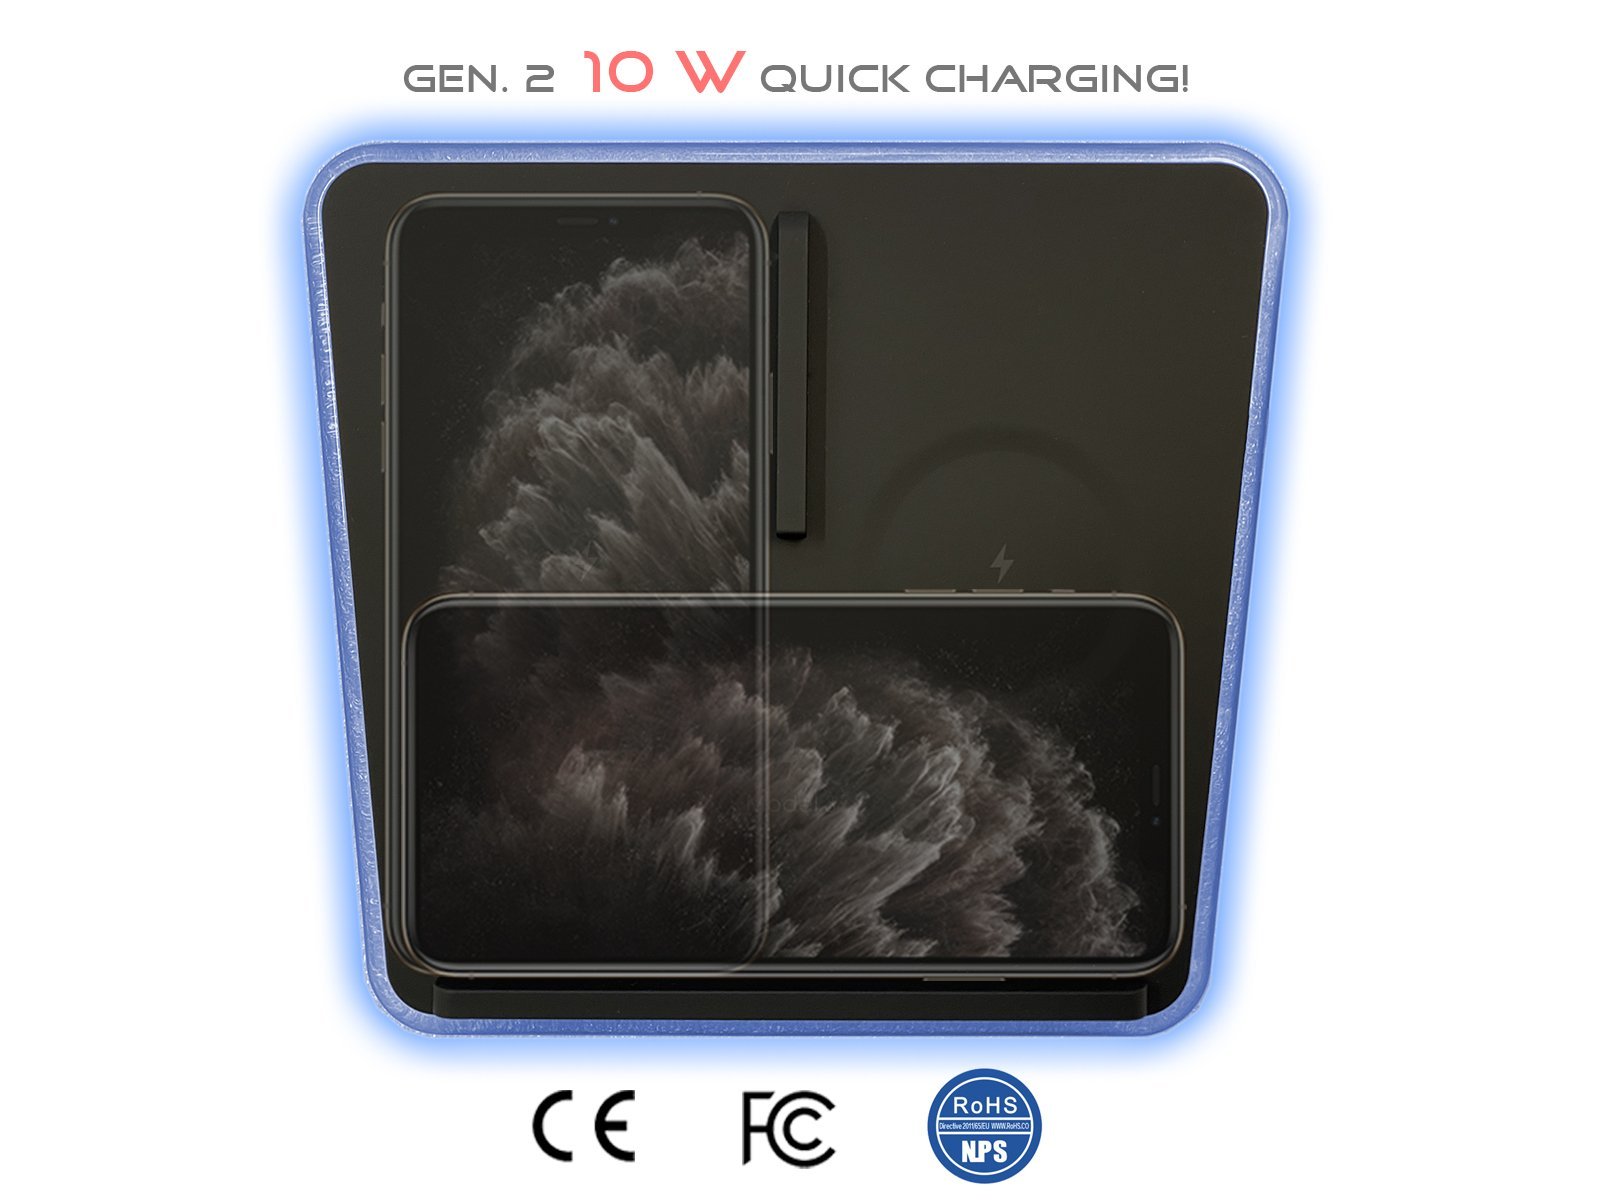 Modell 3/Y: Gen. 2 Wireless Mobile Quick Charging Pad (CE, FCC, RoHS zertifiziert) - Torque Alliance